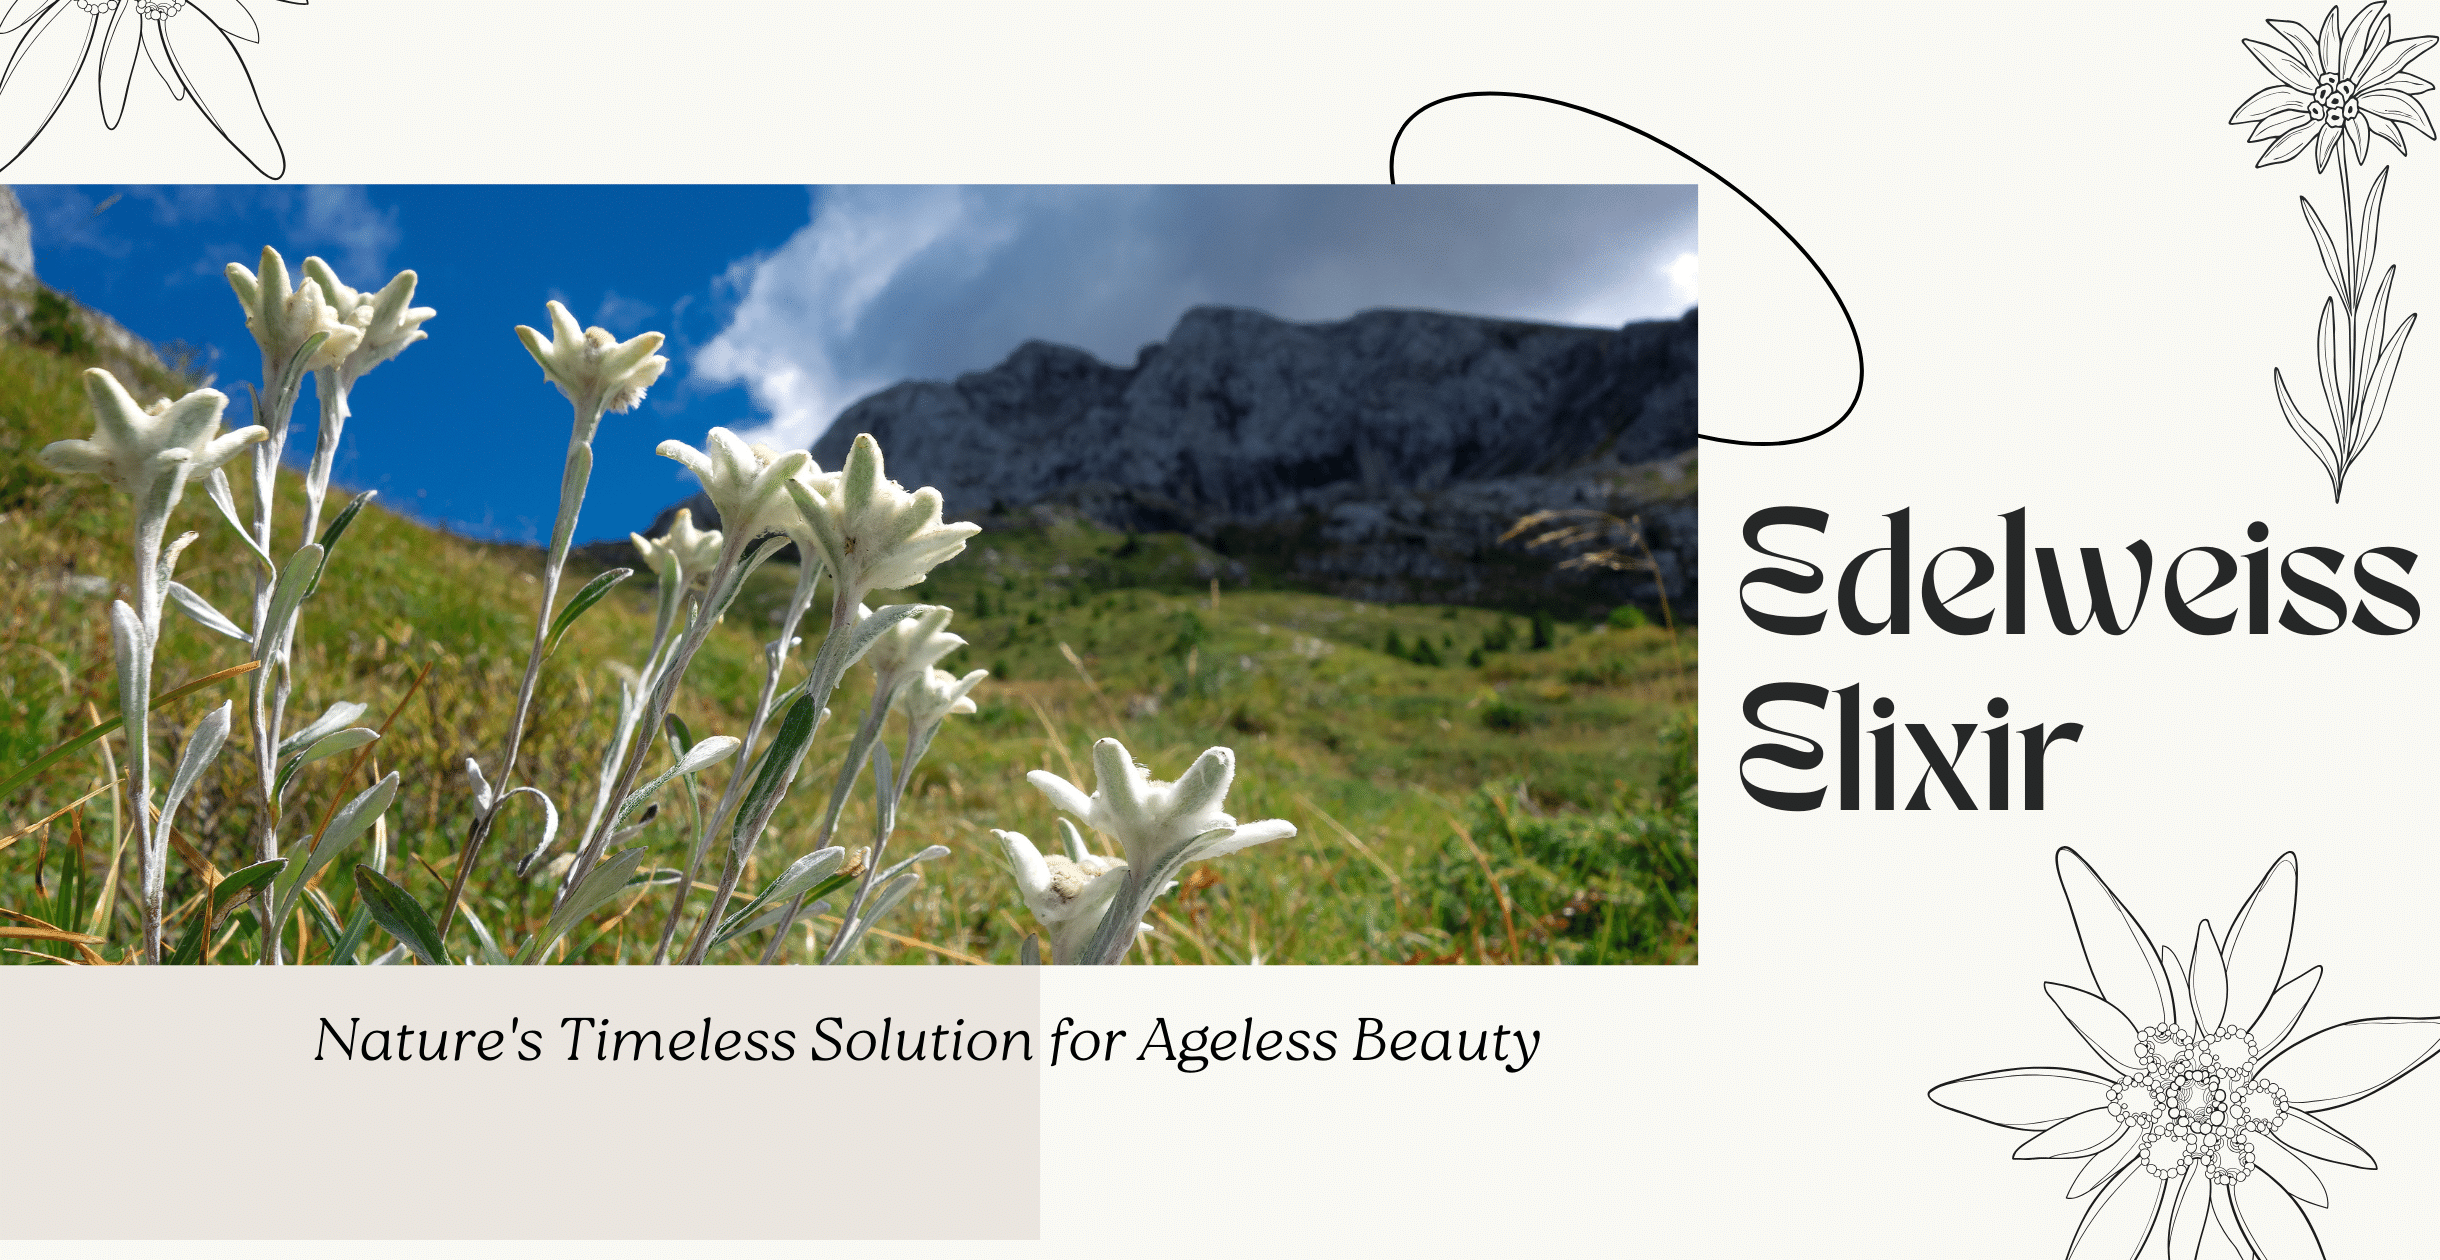 Edelweiss Elixir: Nature's Timeless Solution for Ageless Beauty